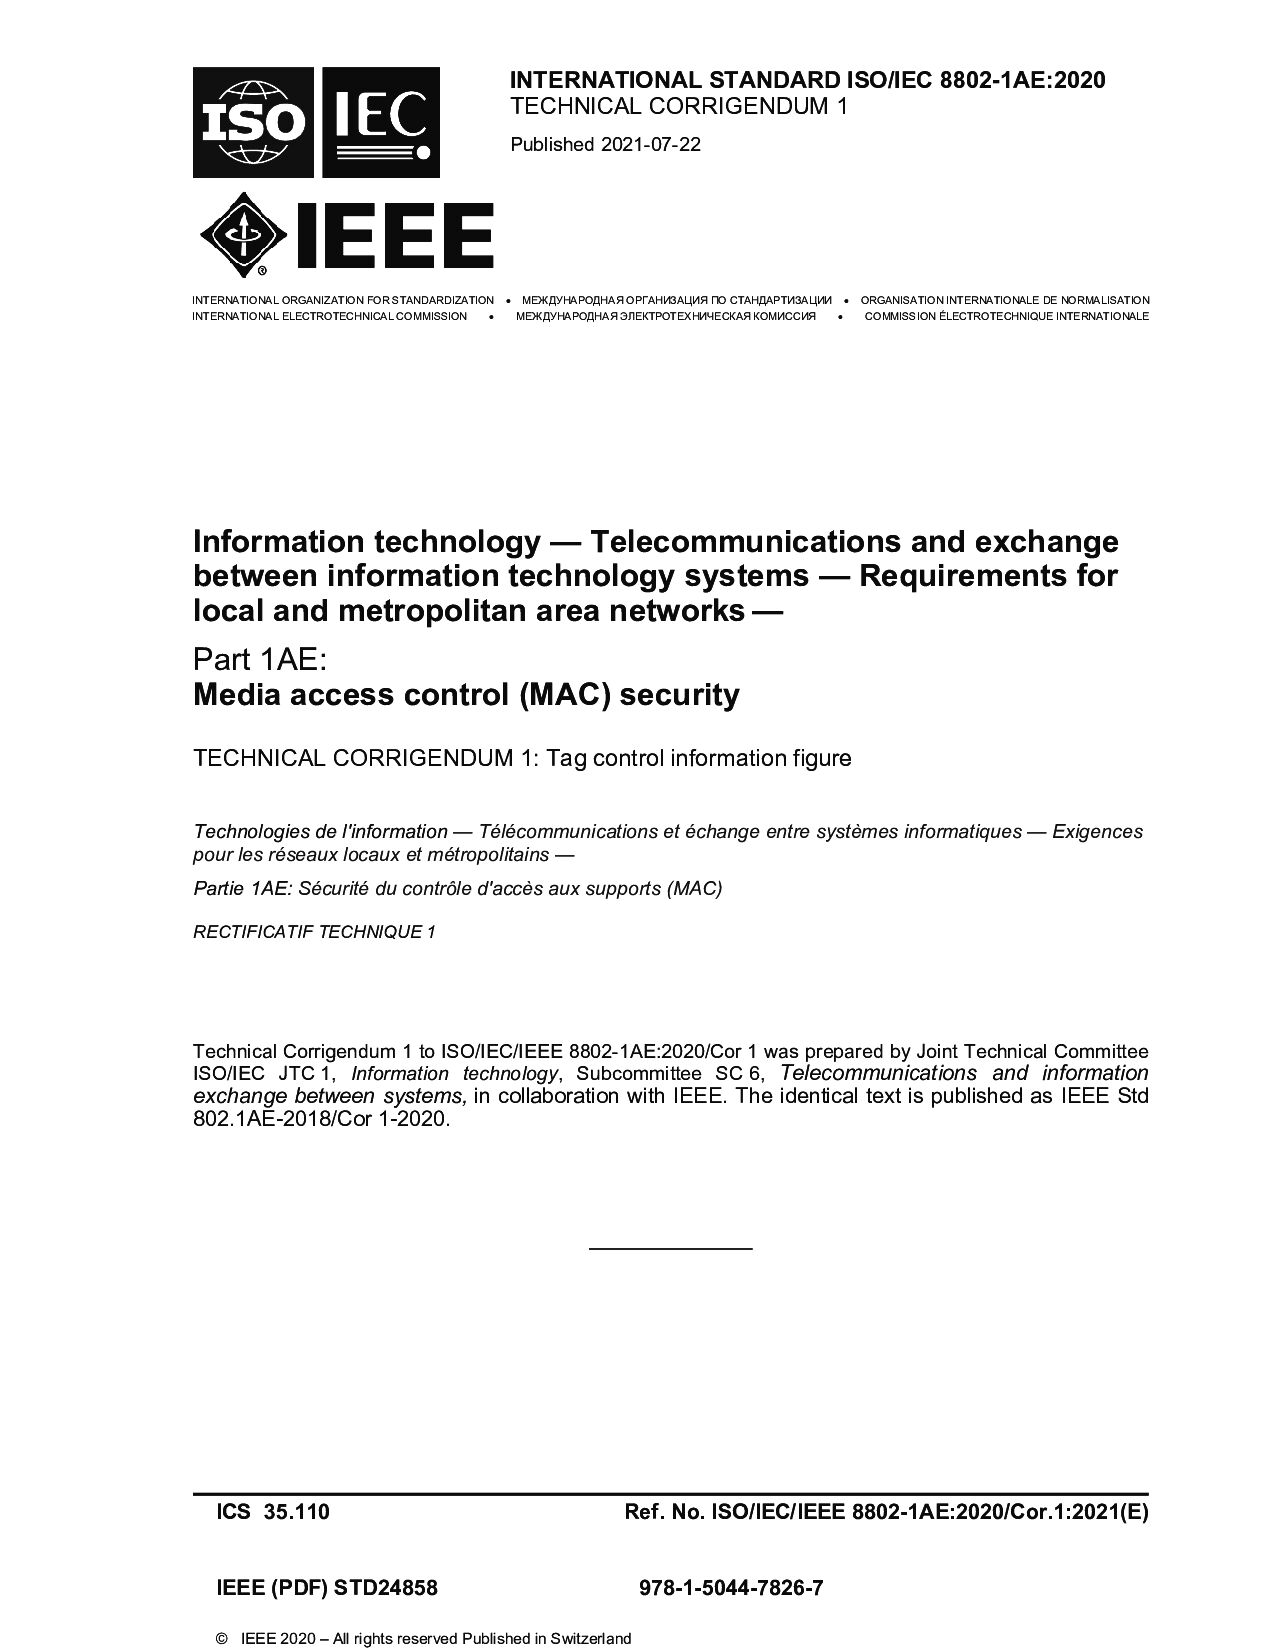 ISO/IEC/IEEE 8802-1AE:2020/Cor 1:2021